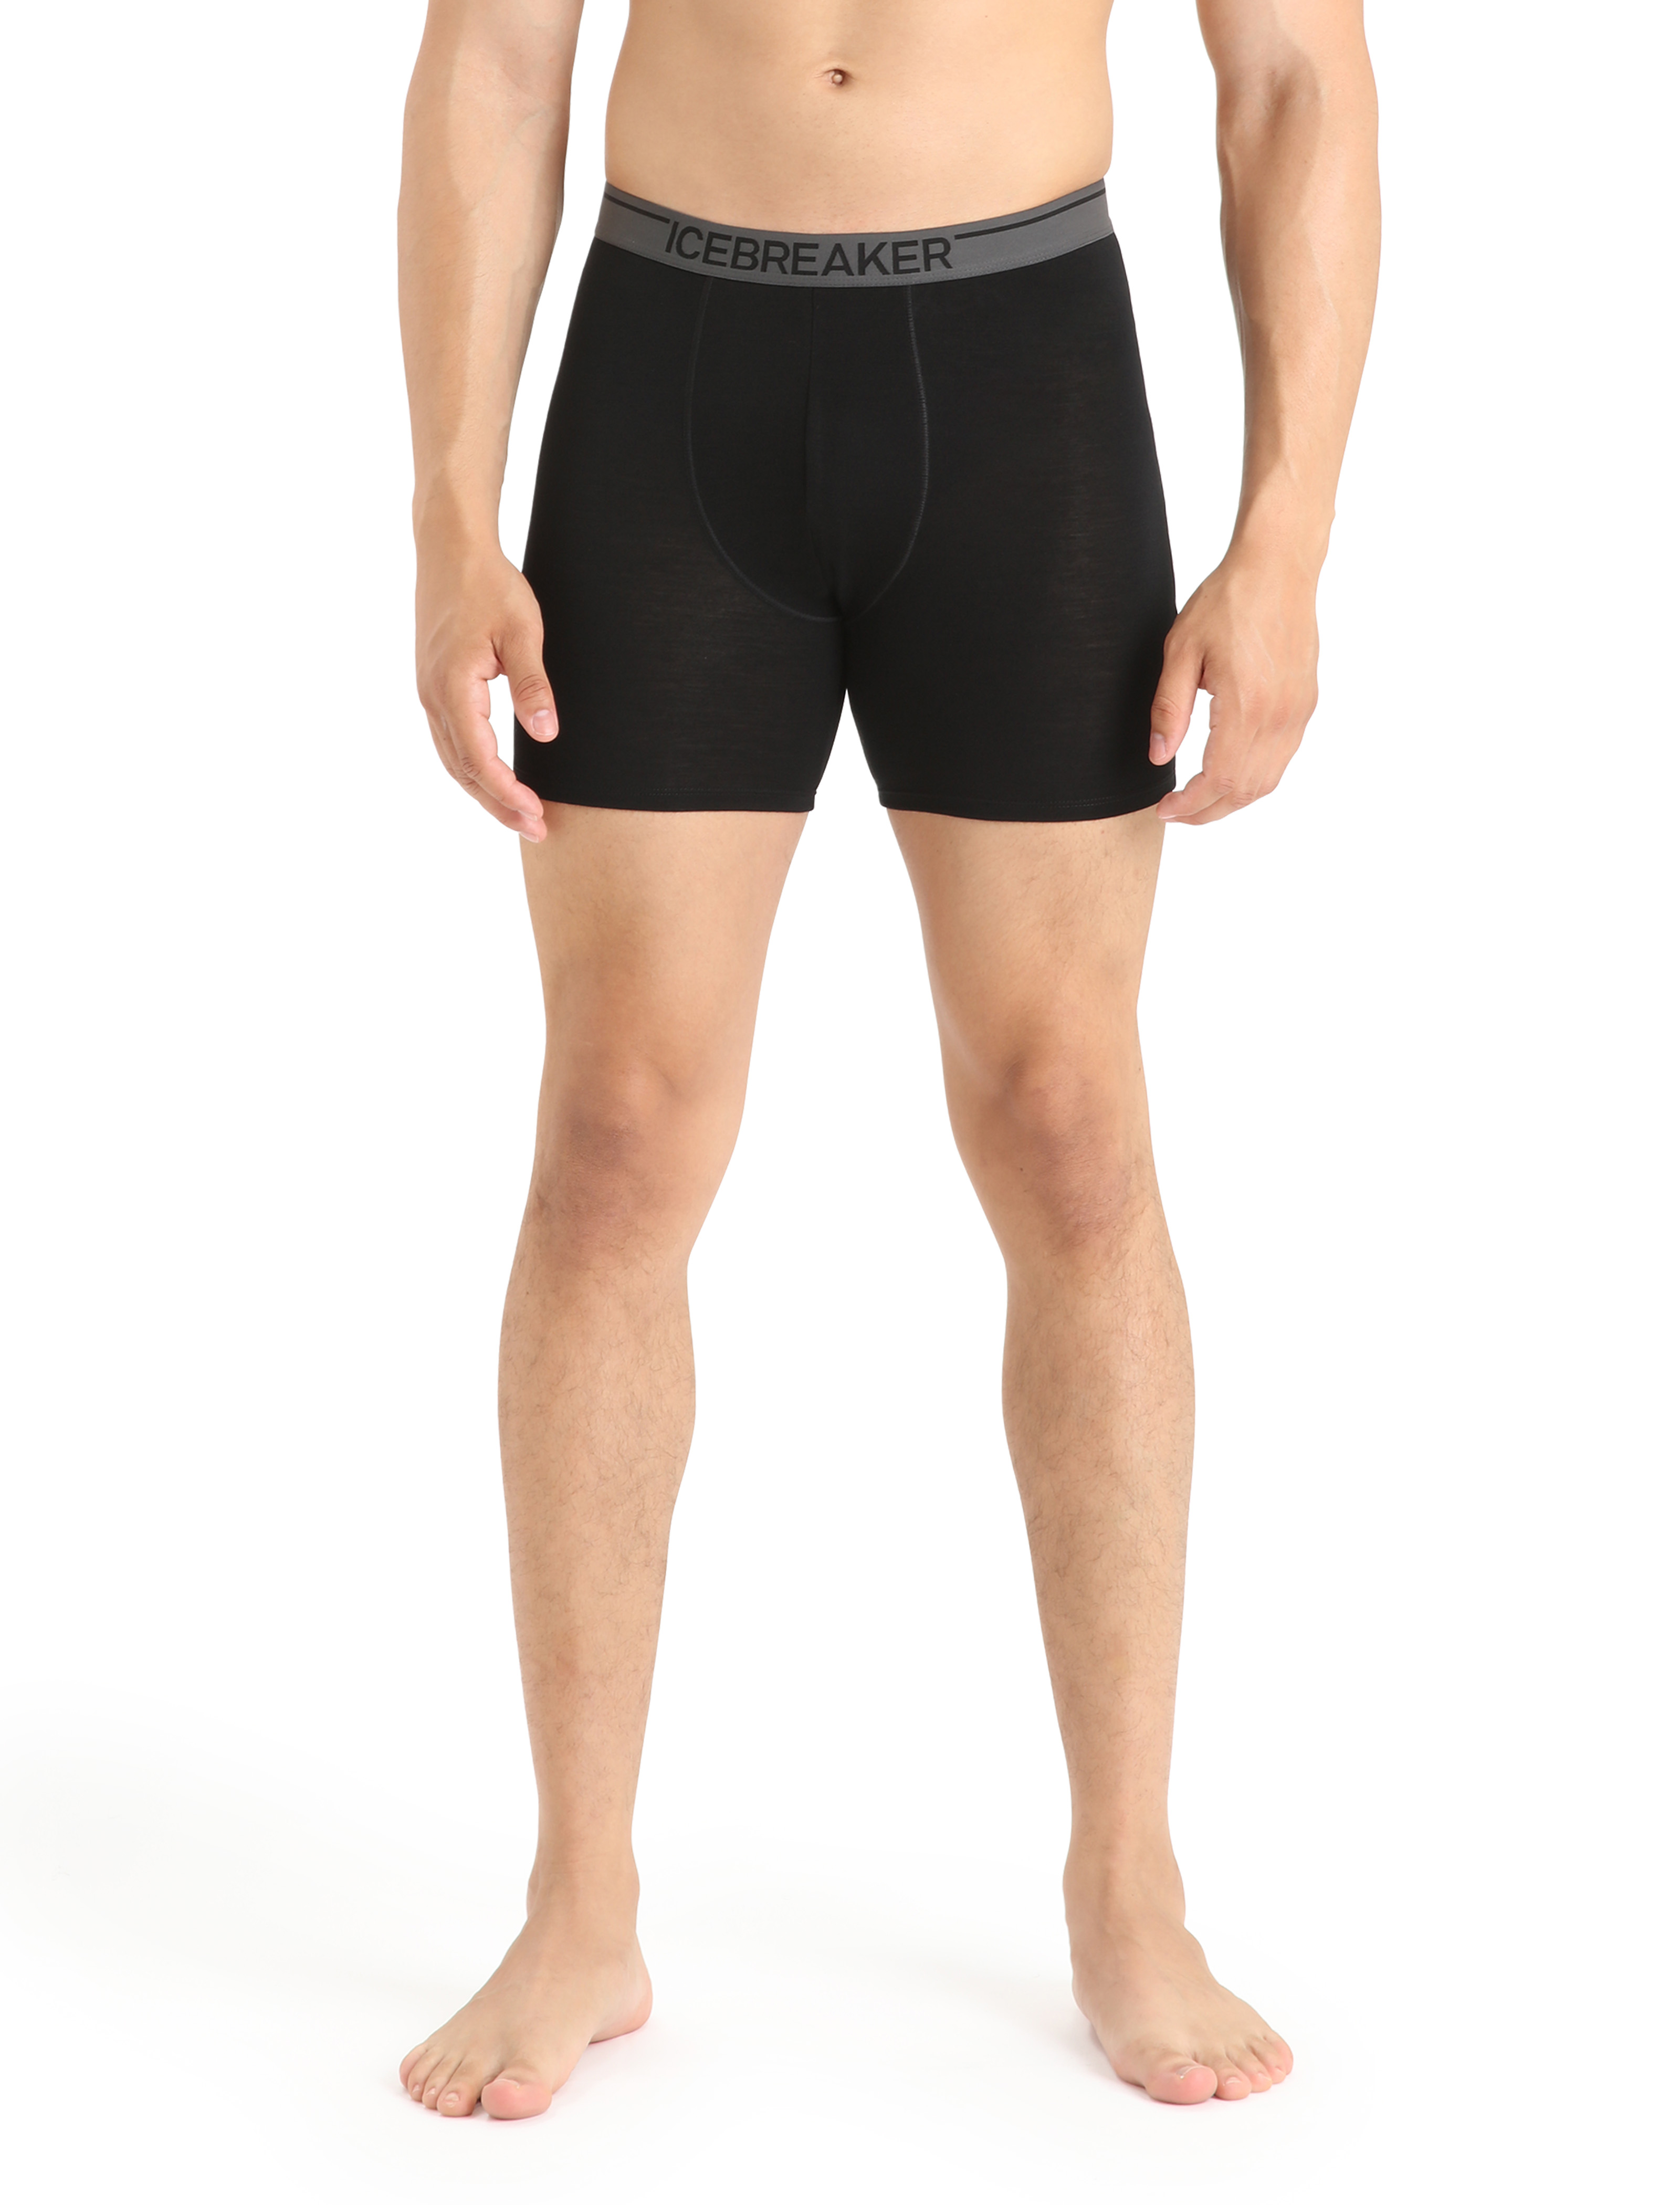 KOERIM Men's Long Leg Boxer Briefs 5Pack,Anti-Chafing, Moisture-Wicking  Underwear, Odor Control